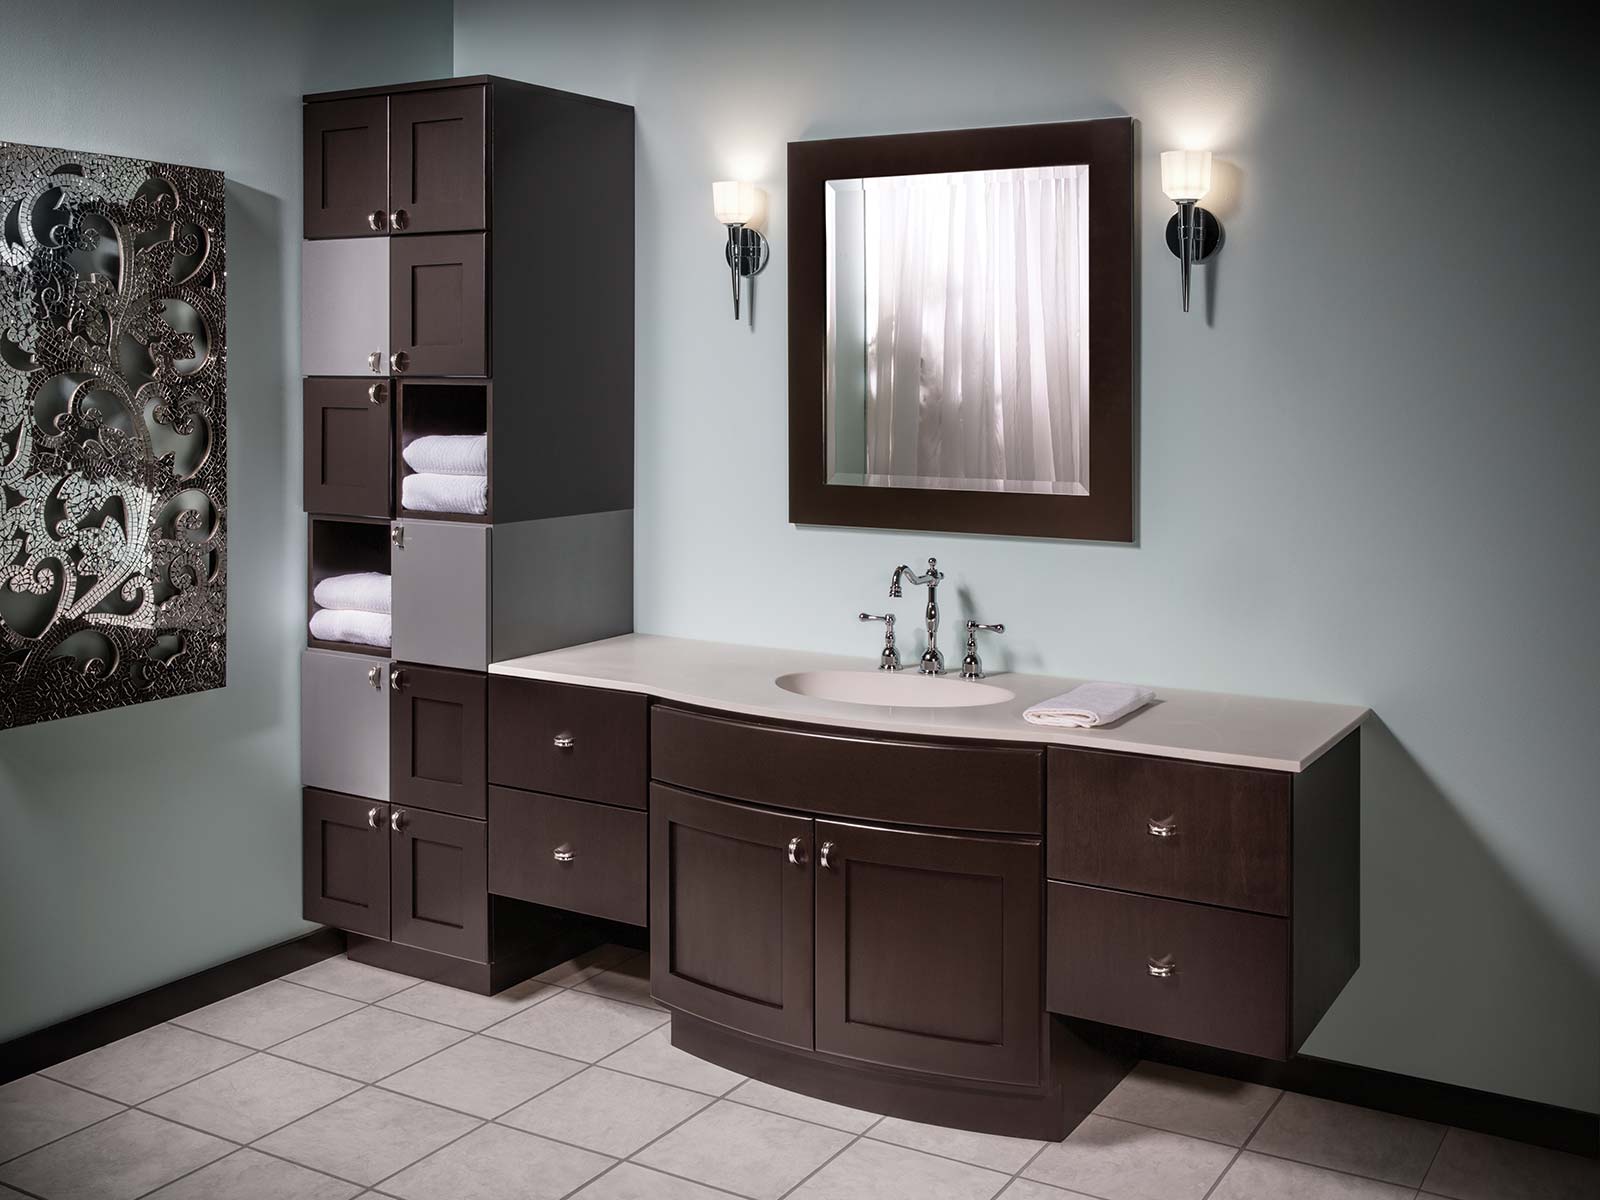 Two-tone bathroom vanity